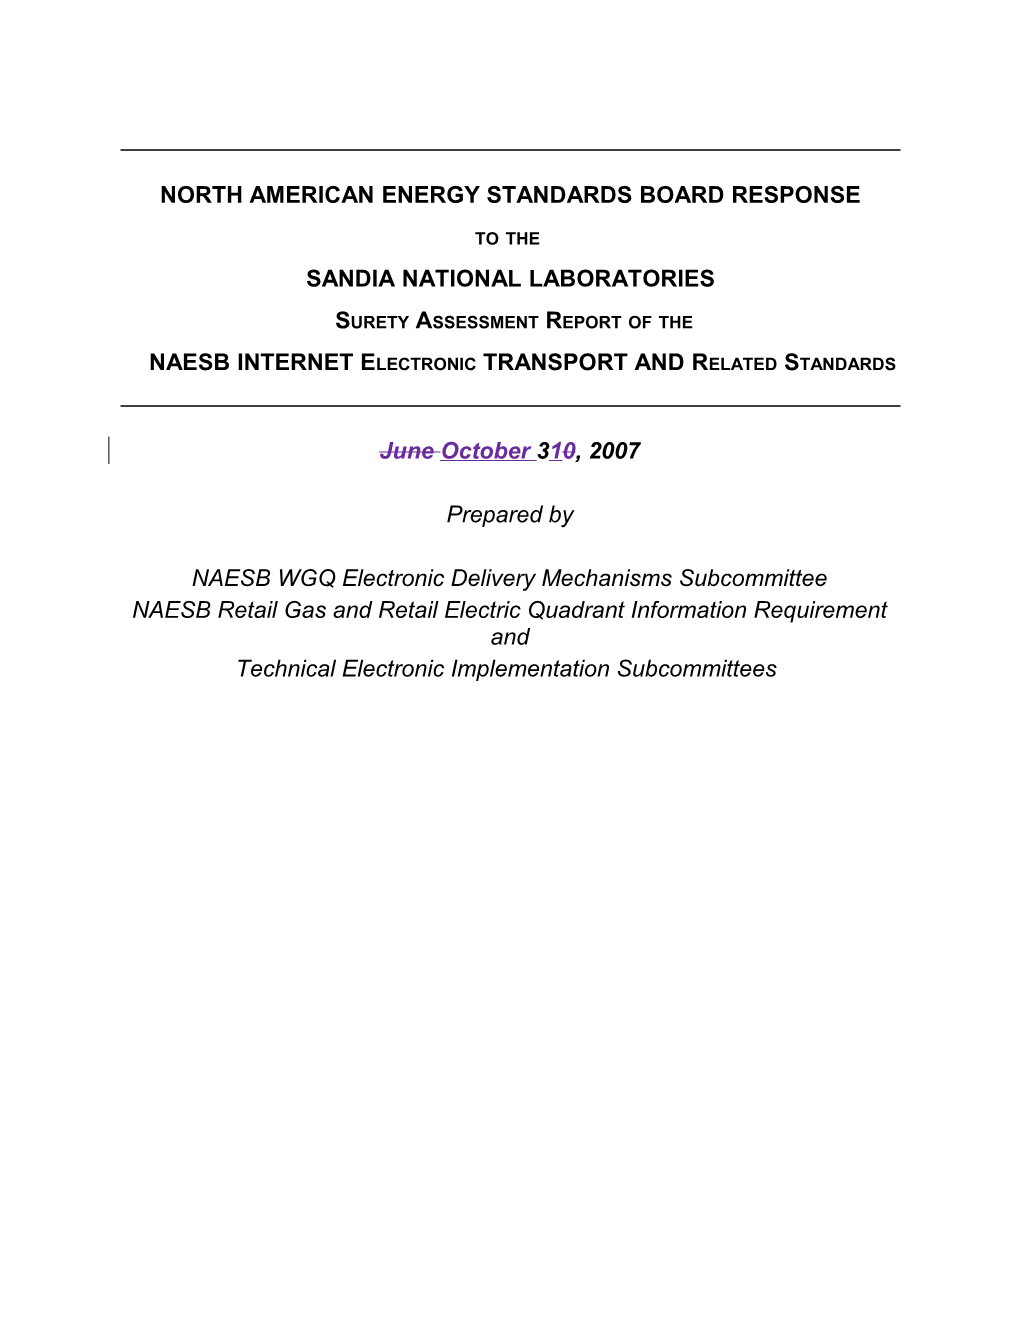 North American Energy Standards Board Response